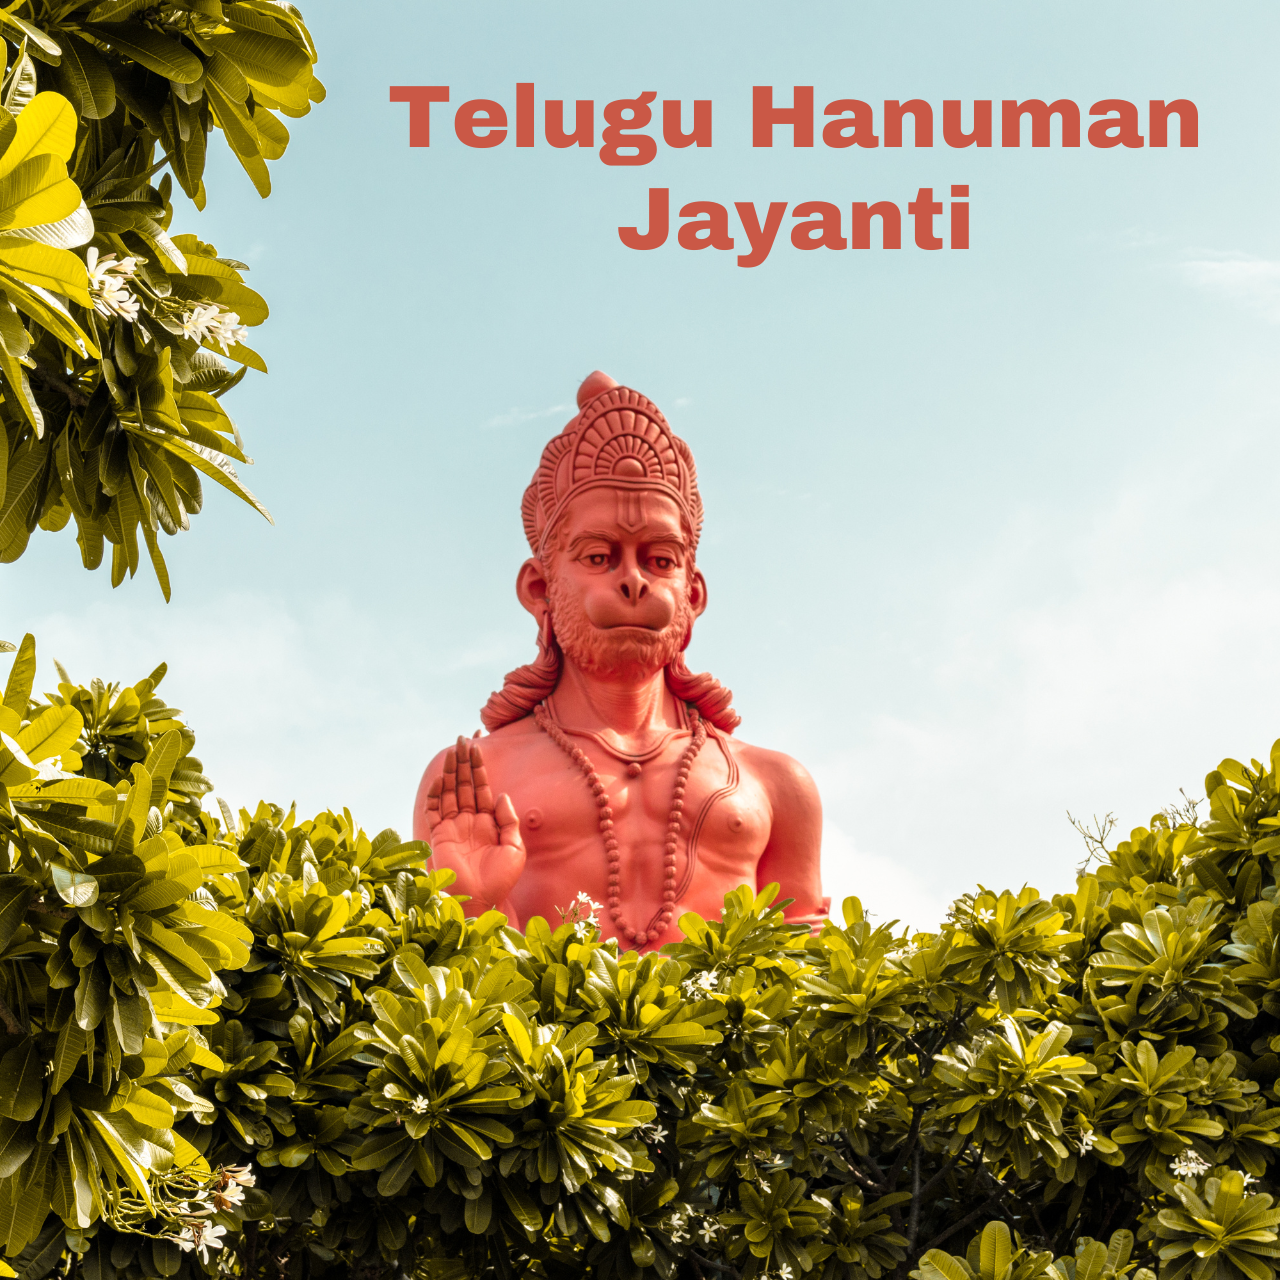 Telugu Hanuman Jayanti 2023 Wishes, Images, Messages, Greetings, Quotes, Banners, Shayari, Sayings, and Posters